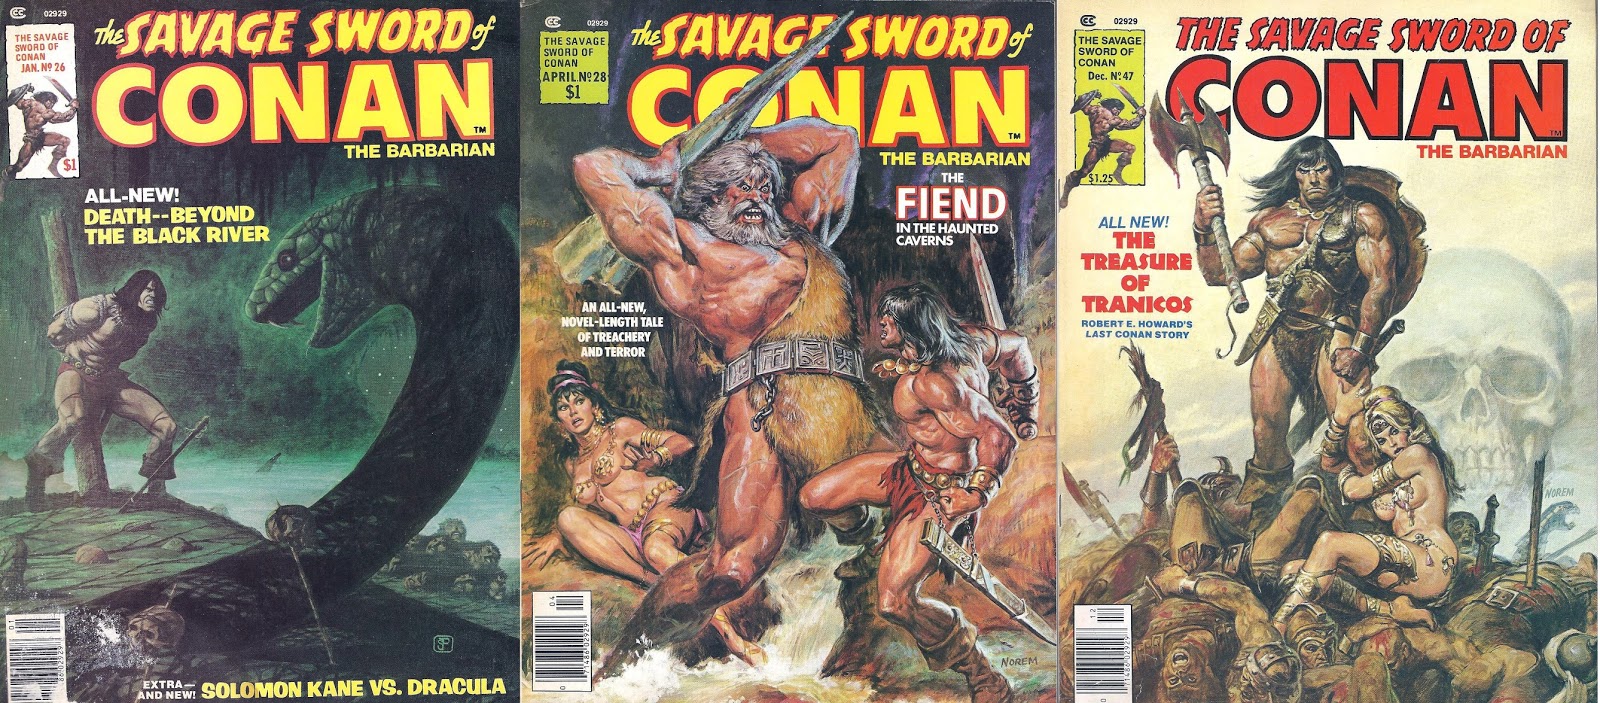 Robert E Howard - Conan : L'intégrale 8 volumes